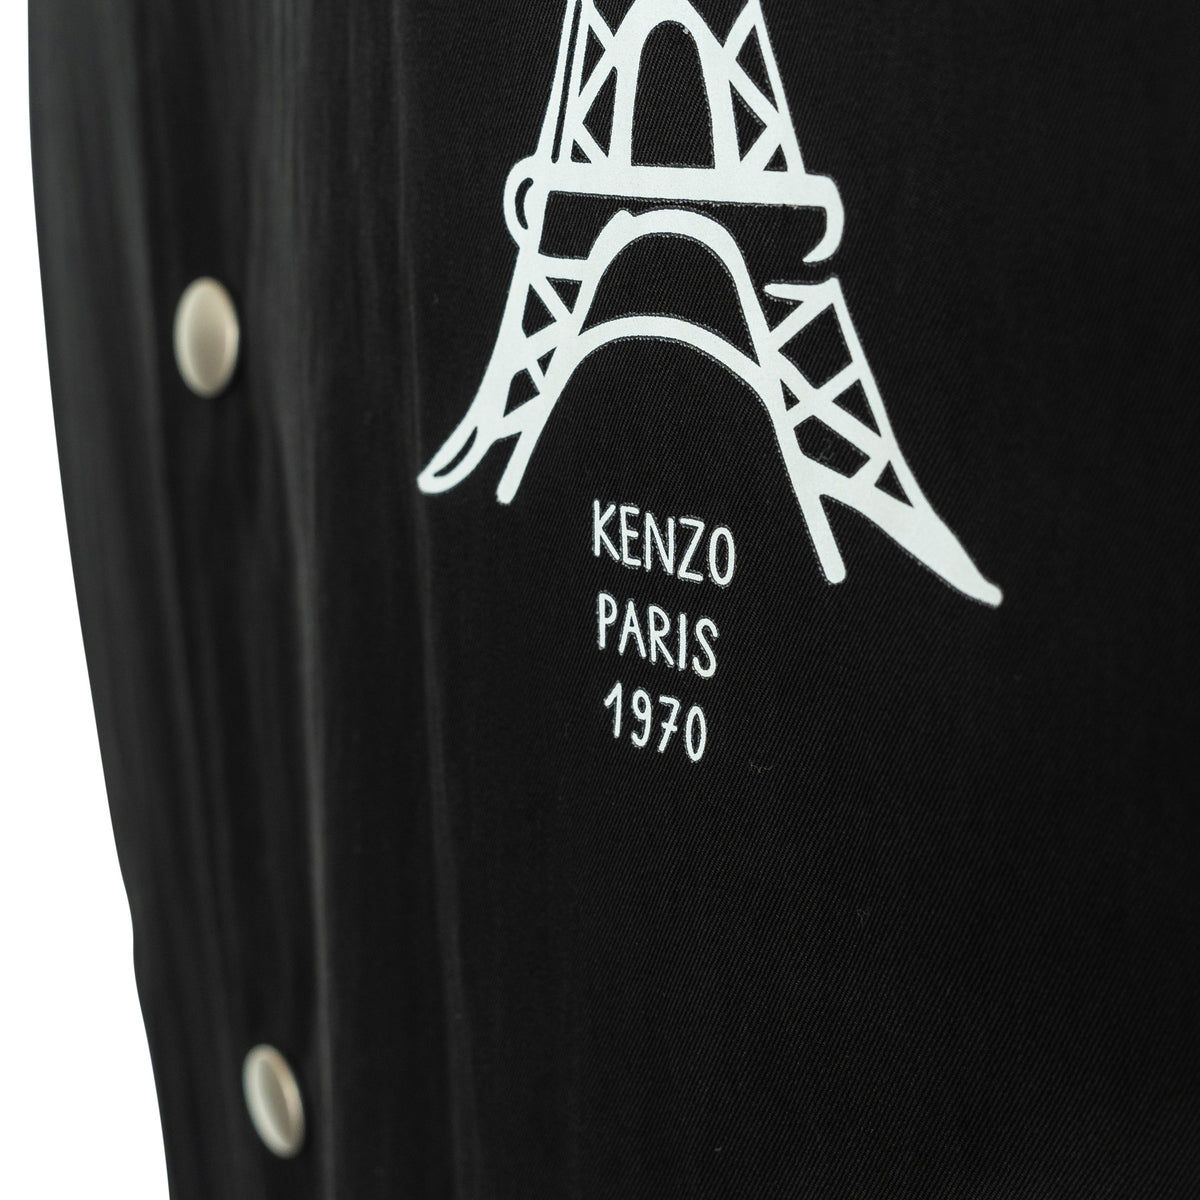 Load image into Gallery viewer, KENZO Black Kenzo Paris 1970 Coach Jacket
